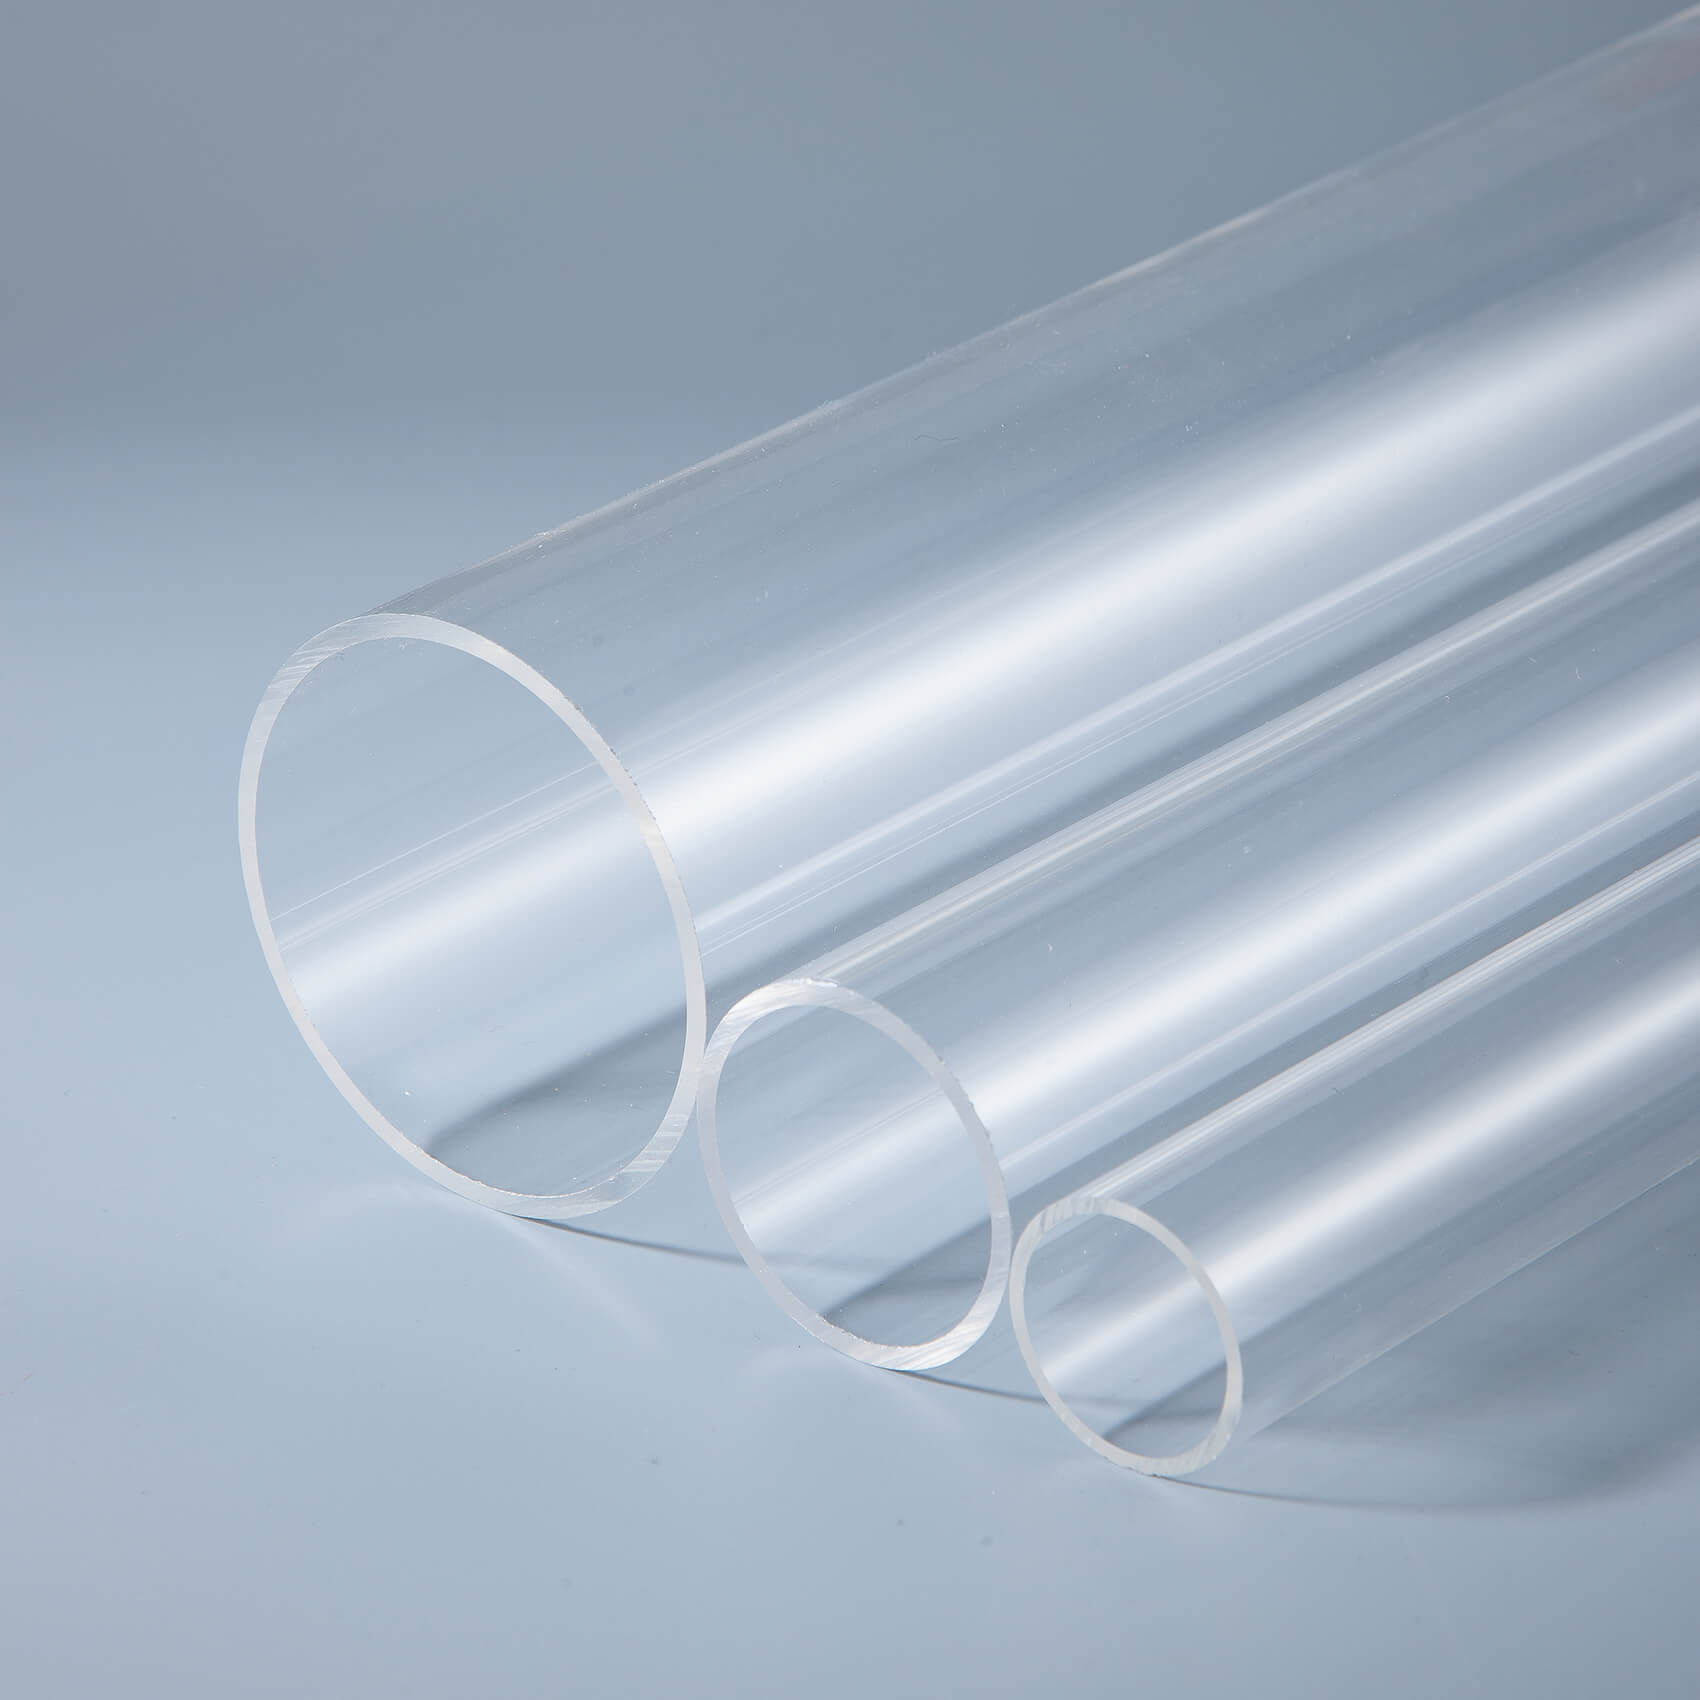 Mingshi extruded diffused acrylic tubes